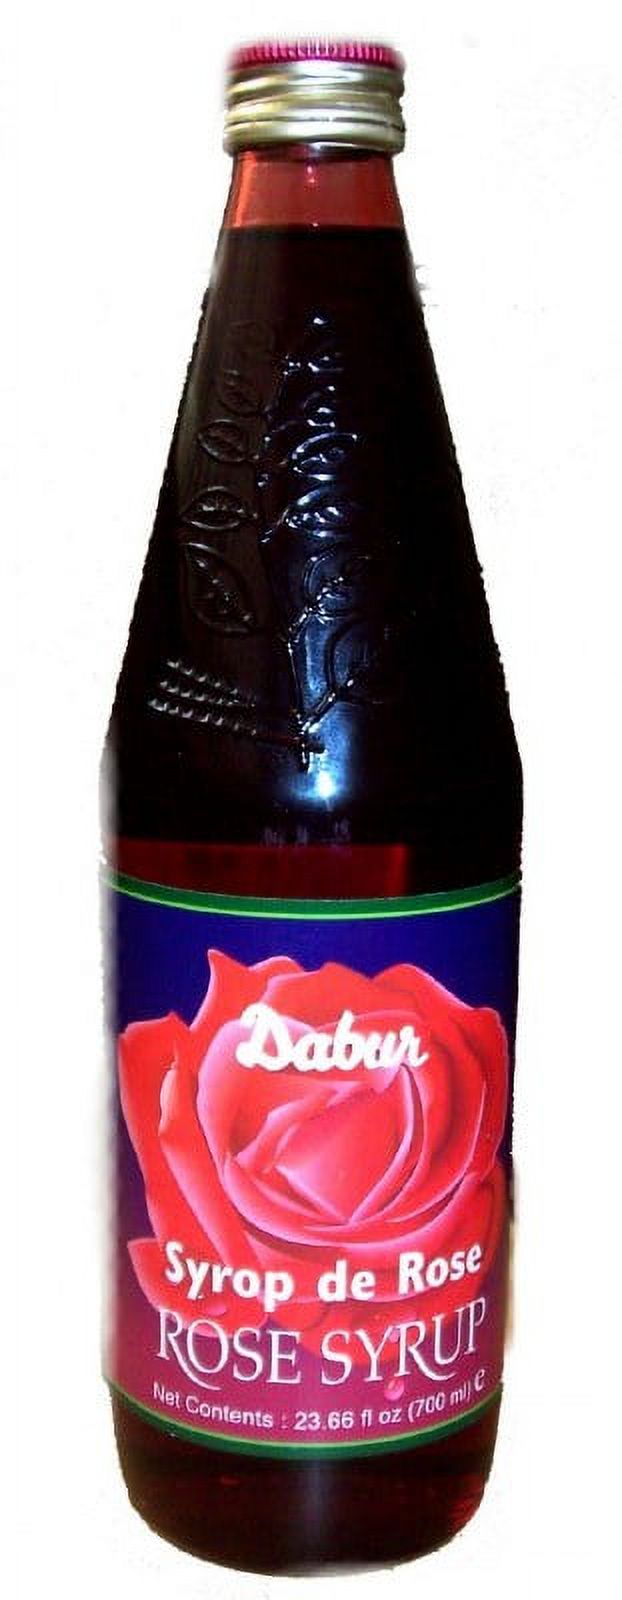 Dabur Rose Syrup 750ml - image 1 of 5